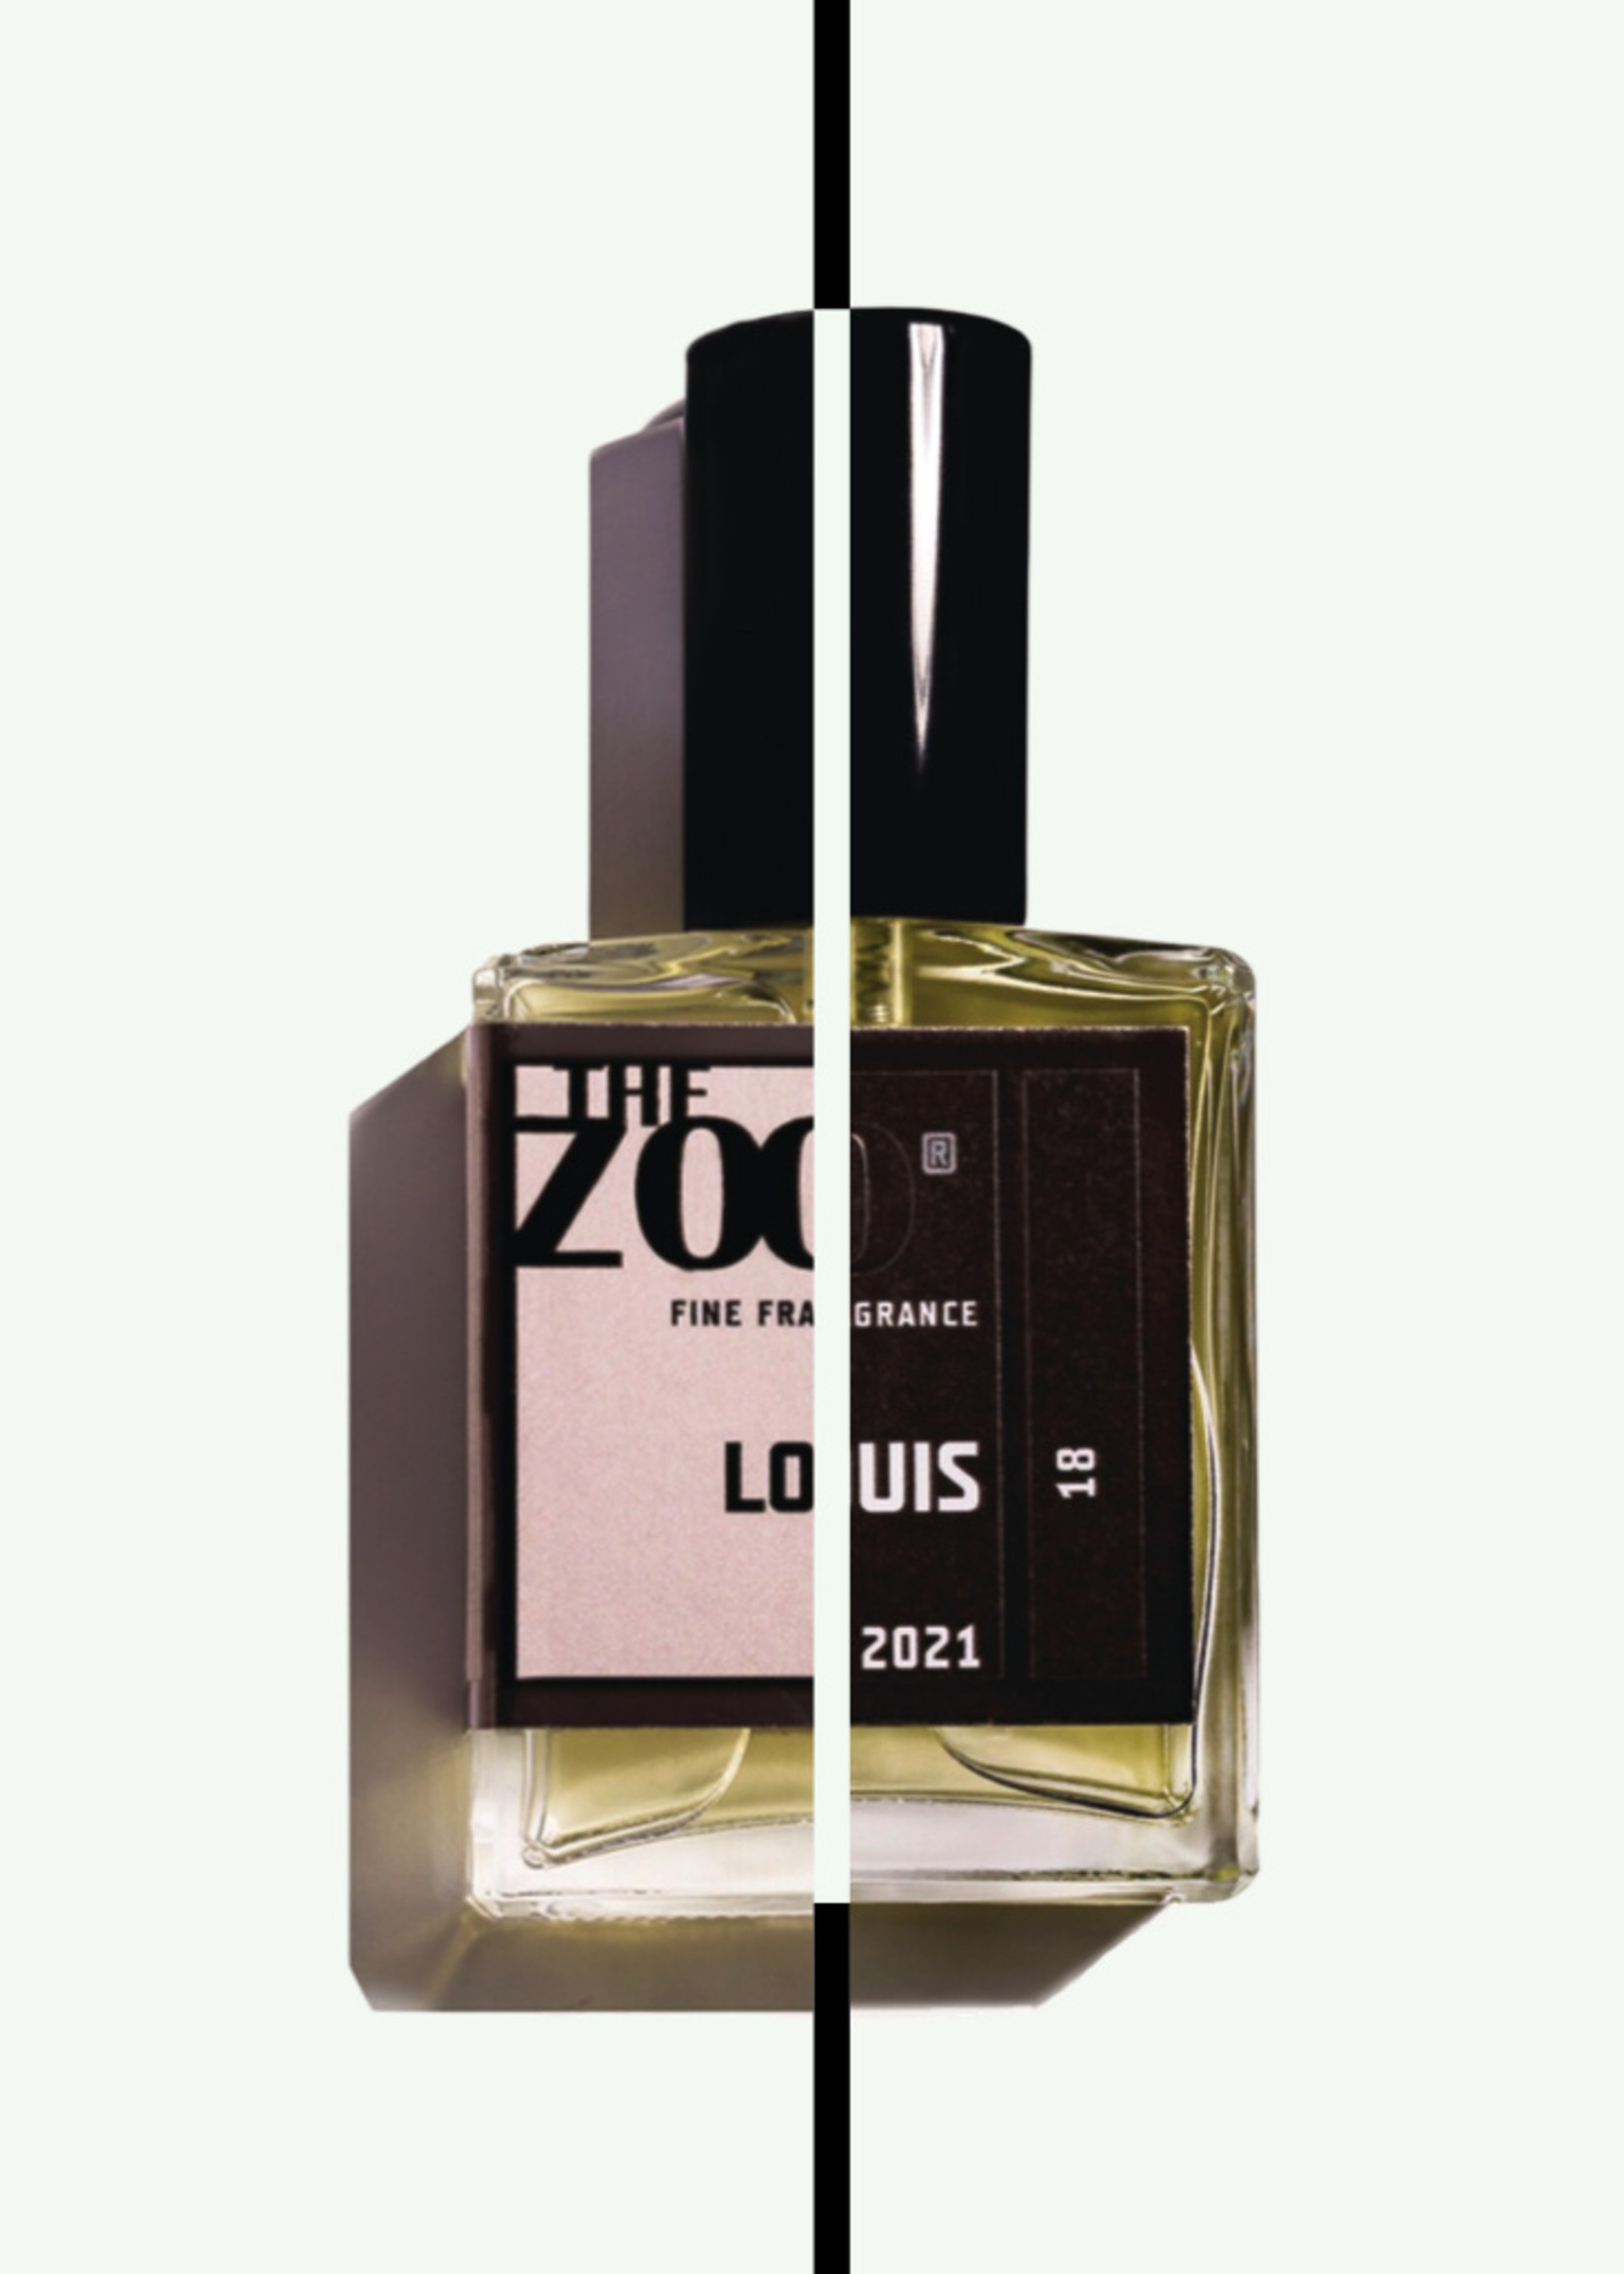 Louis Vuitton fragrances any good? : r/fragrance